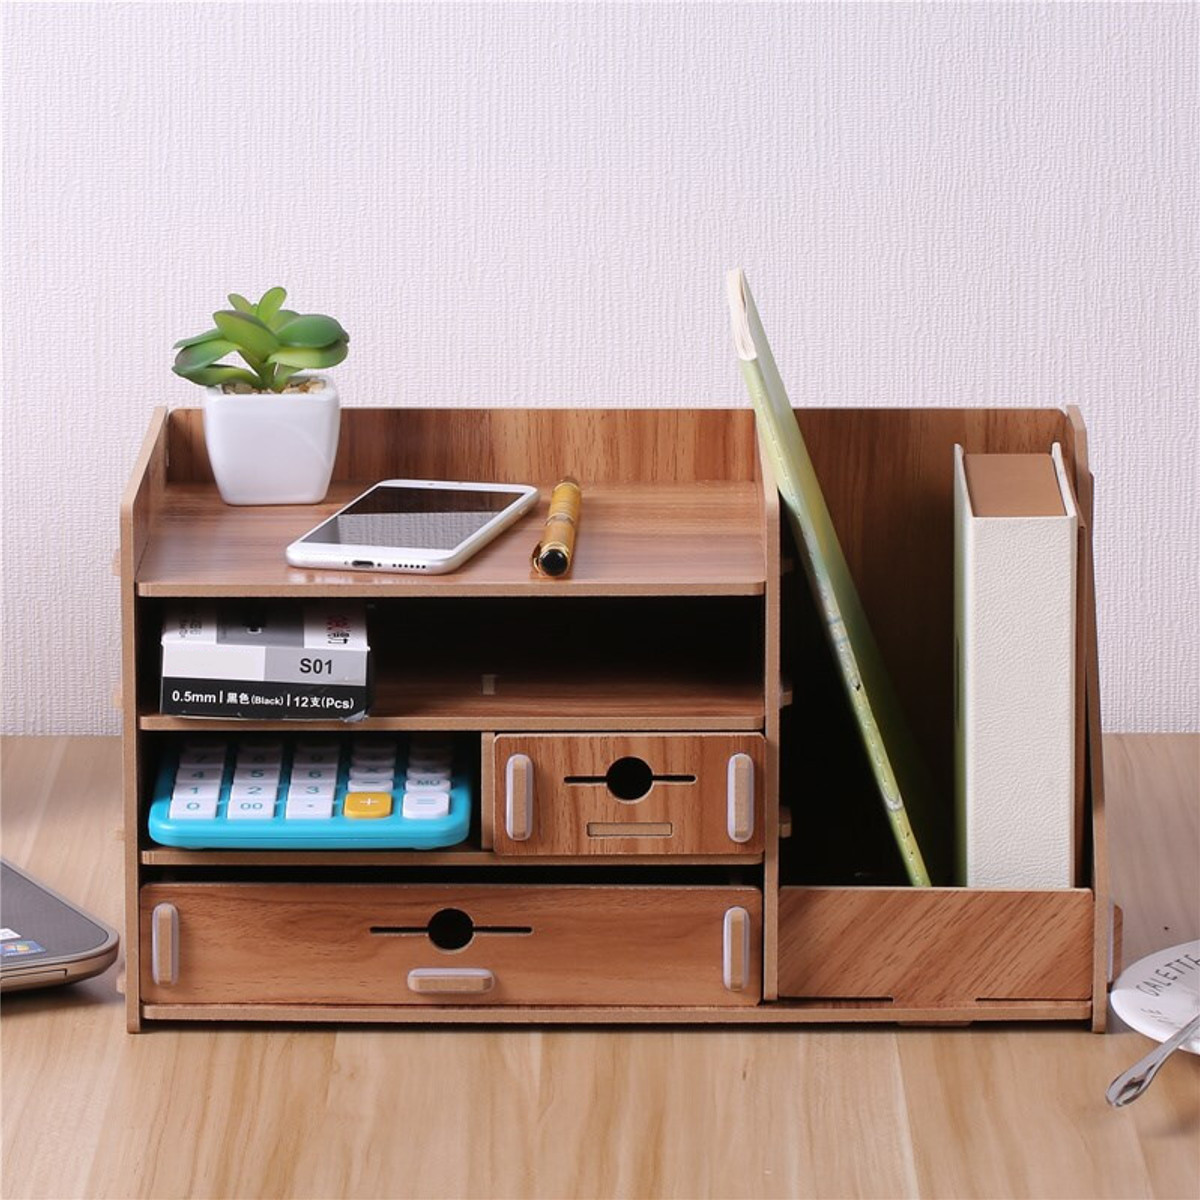 138x8x8quot-Wooden-DIY-Storage-Box-With-Drawer-Cosmetics-Organizer-Desktop-Home-Decorations-1634110-4